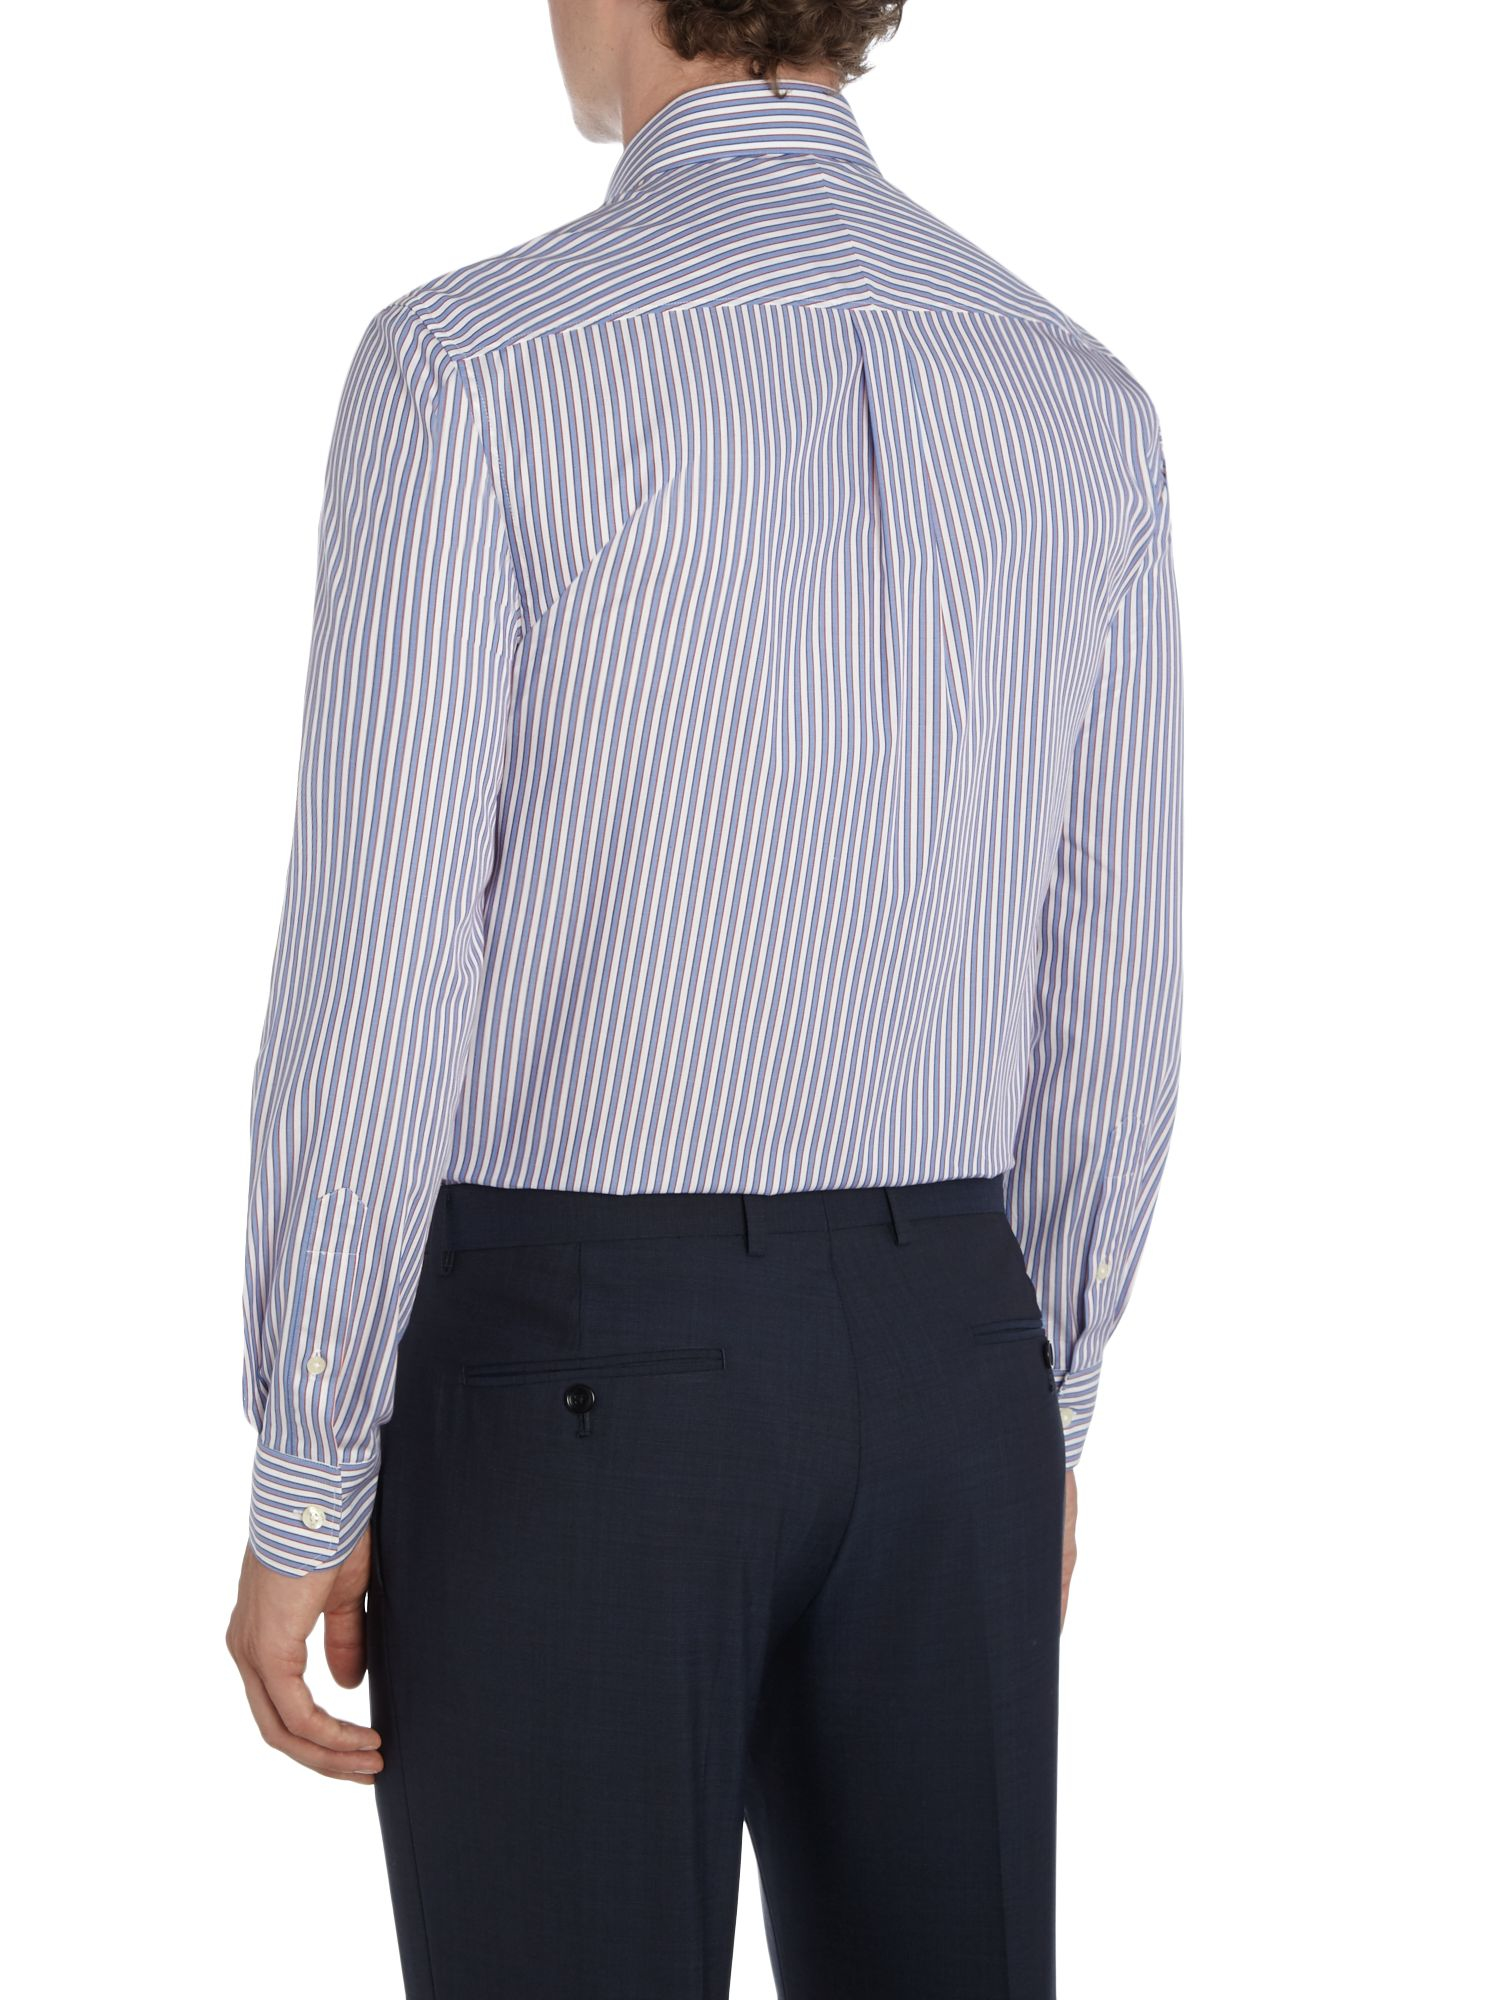 Lyst - Howick Allendale Stripe Shirt in Blue for Men1500 x 2000